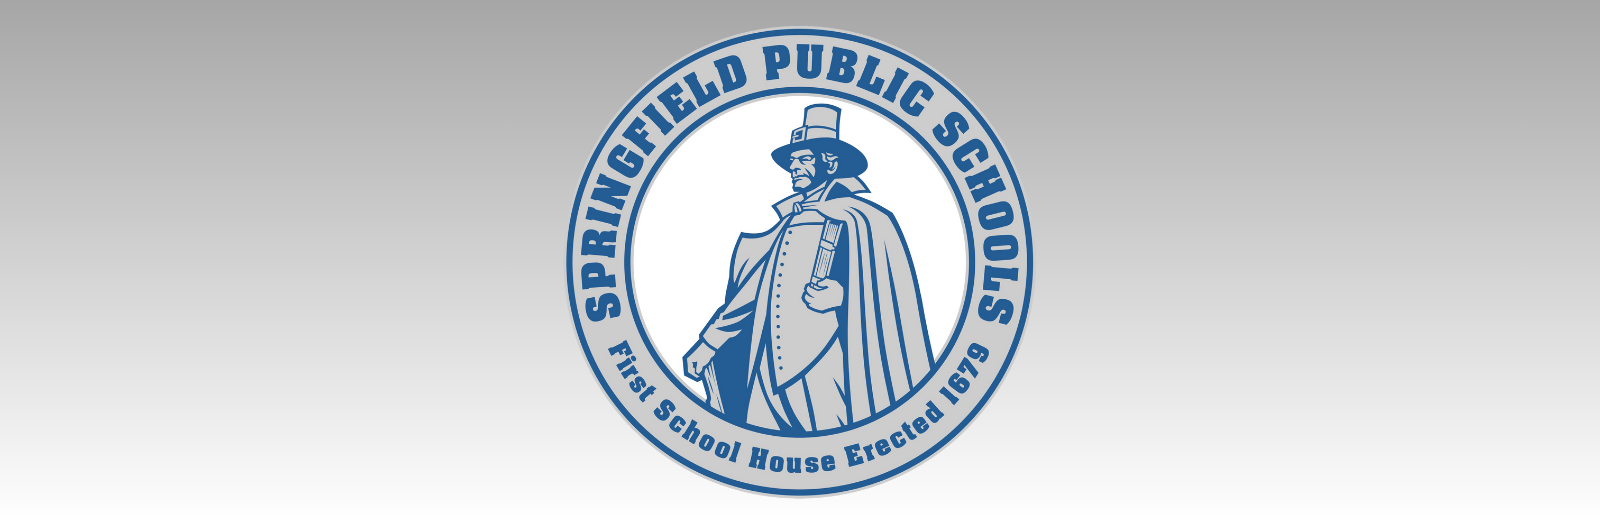 Springfield Public Schools Family Engagement Expo